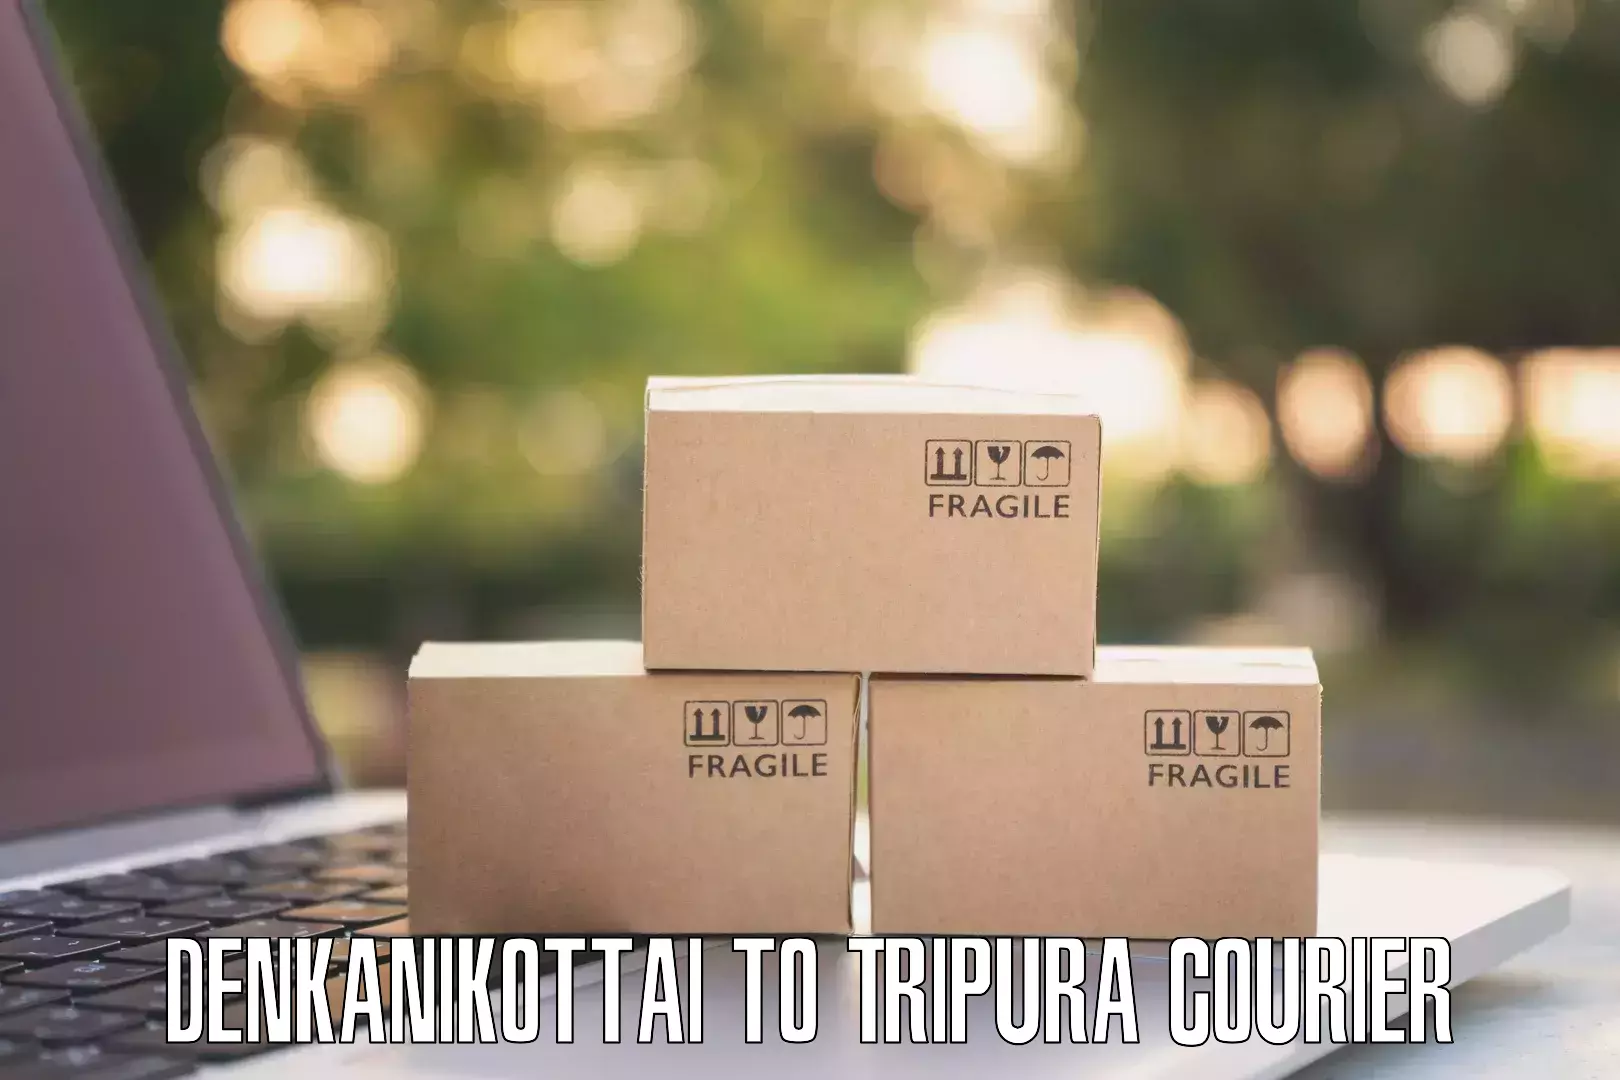 Courier service innovation Denkanikottai to Agartala